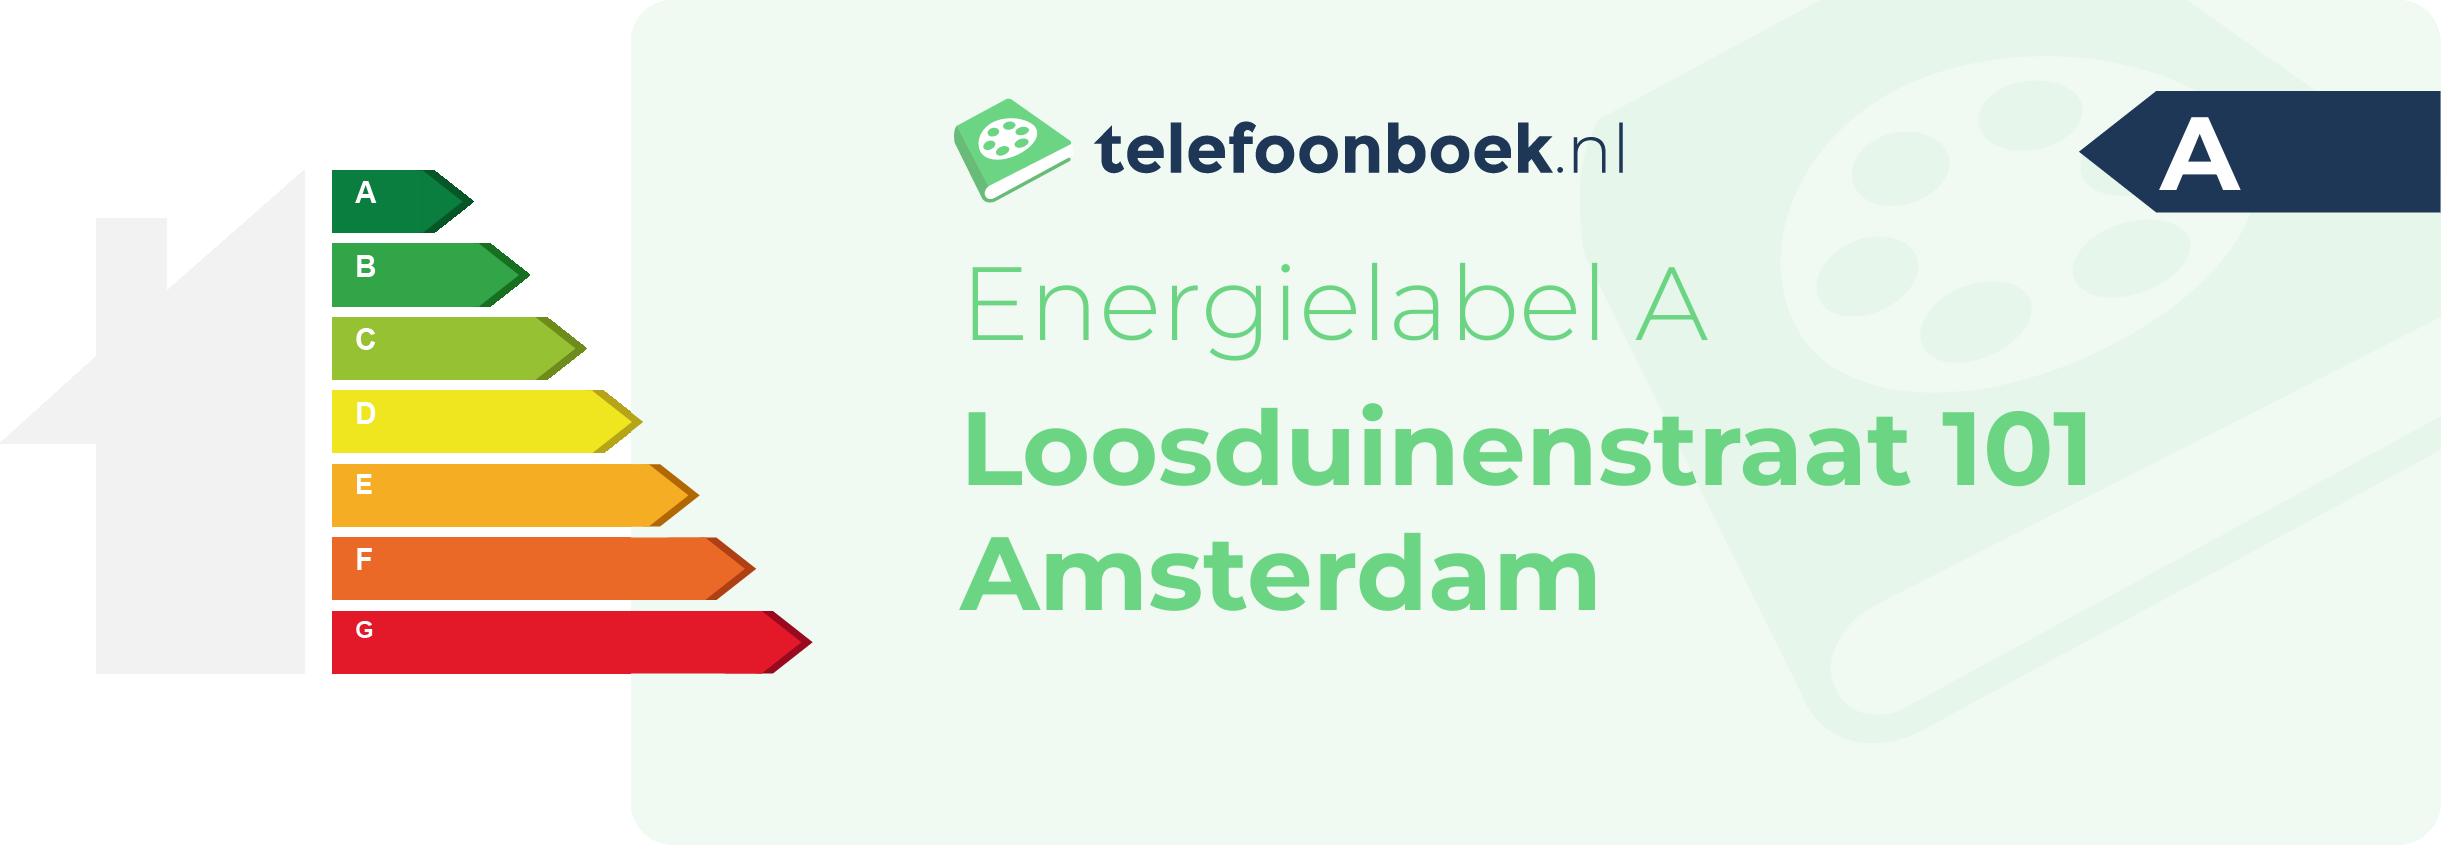 Energielabel Loosduinenstraat 101 Amsterdam